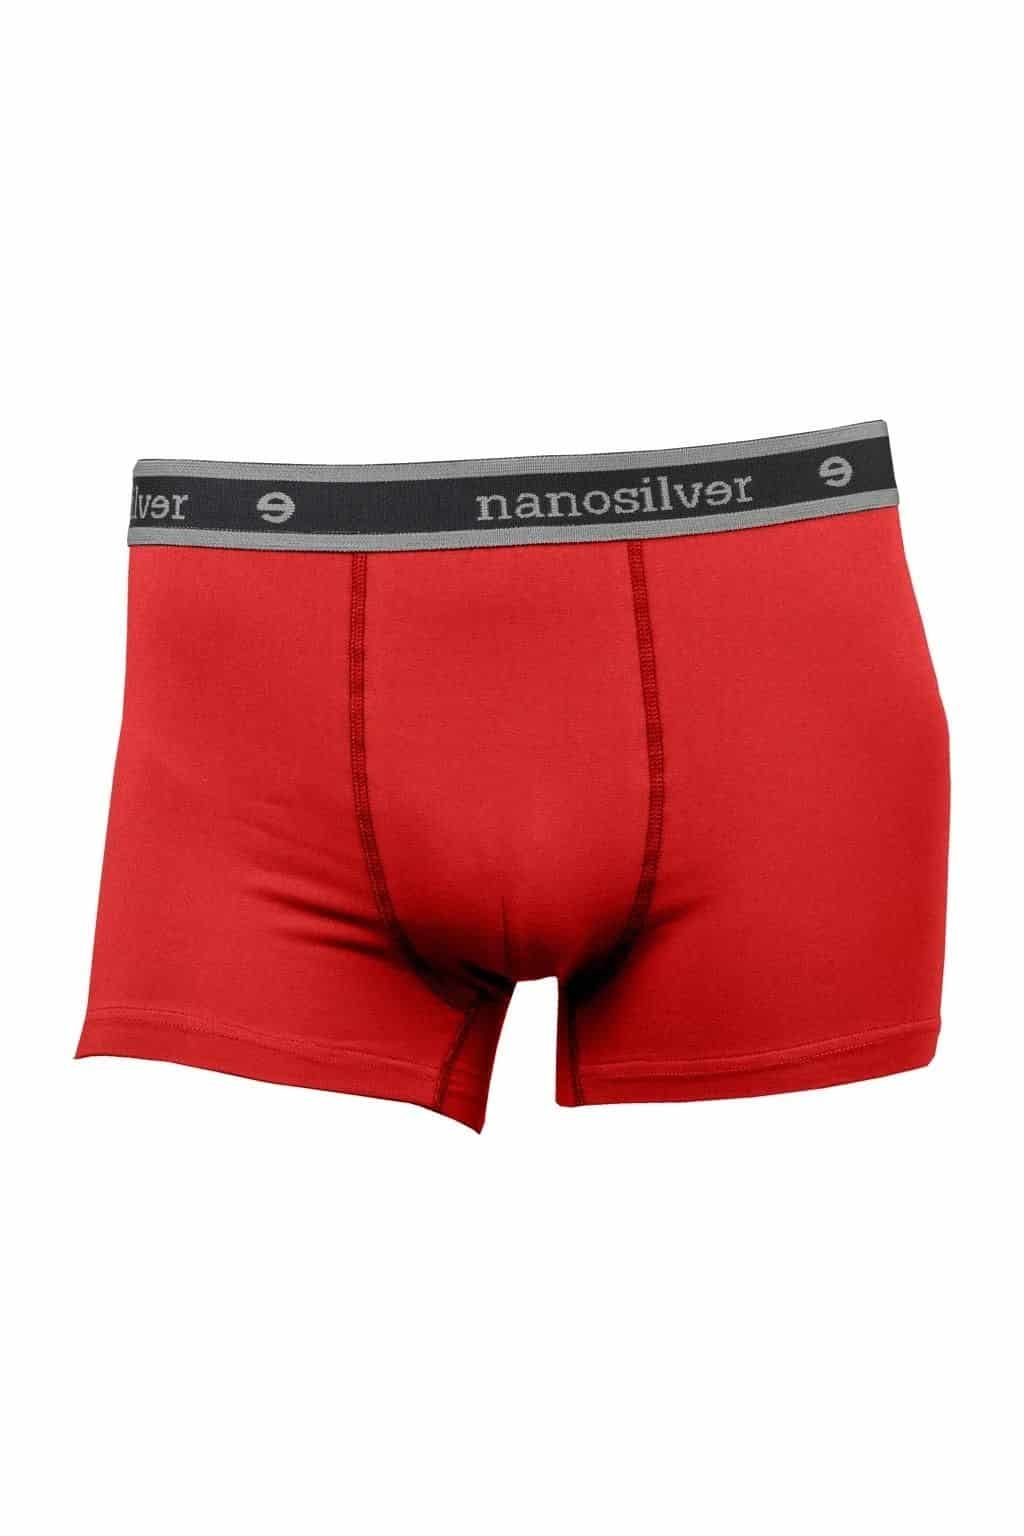 nanosilver® Nano boxerky s gumou nanosilver bez zadního švu – červené Velikost: XXL